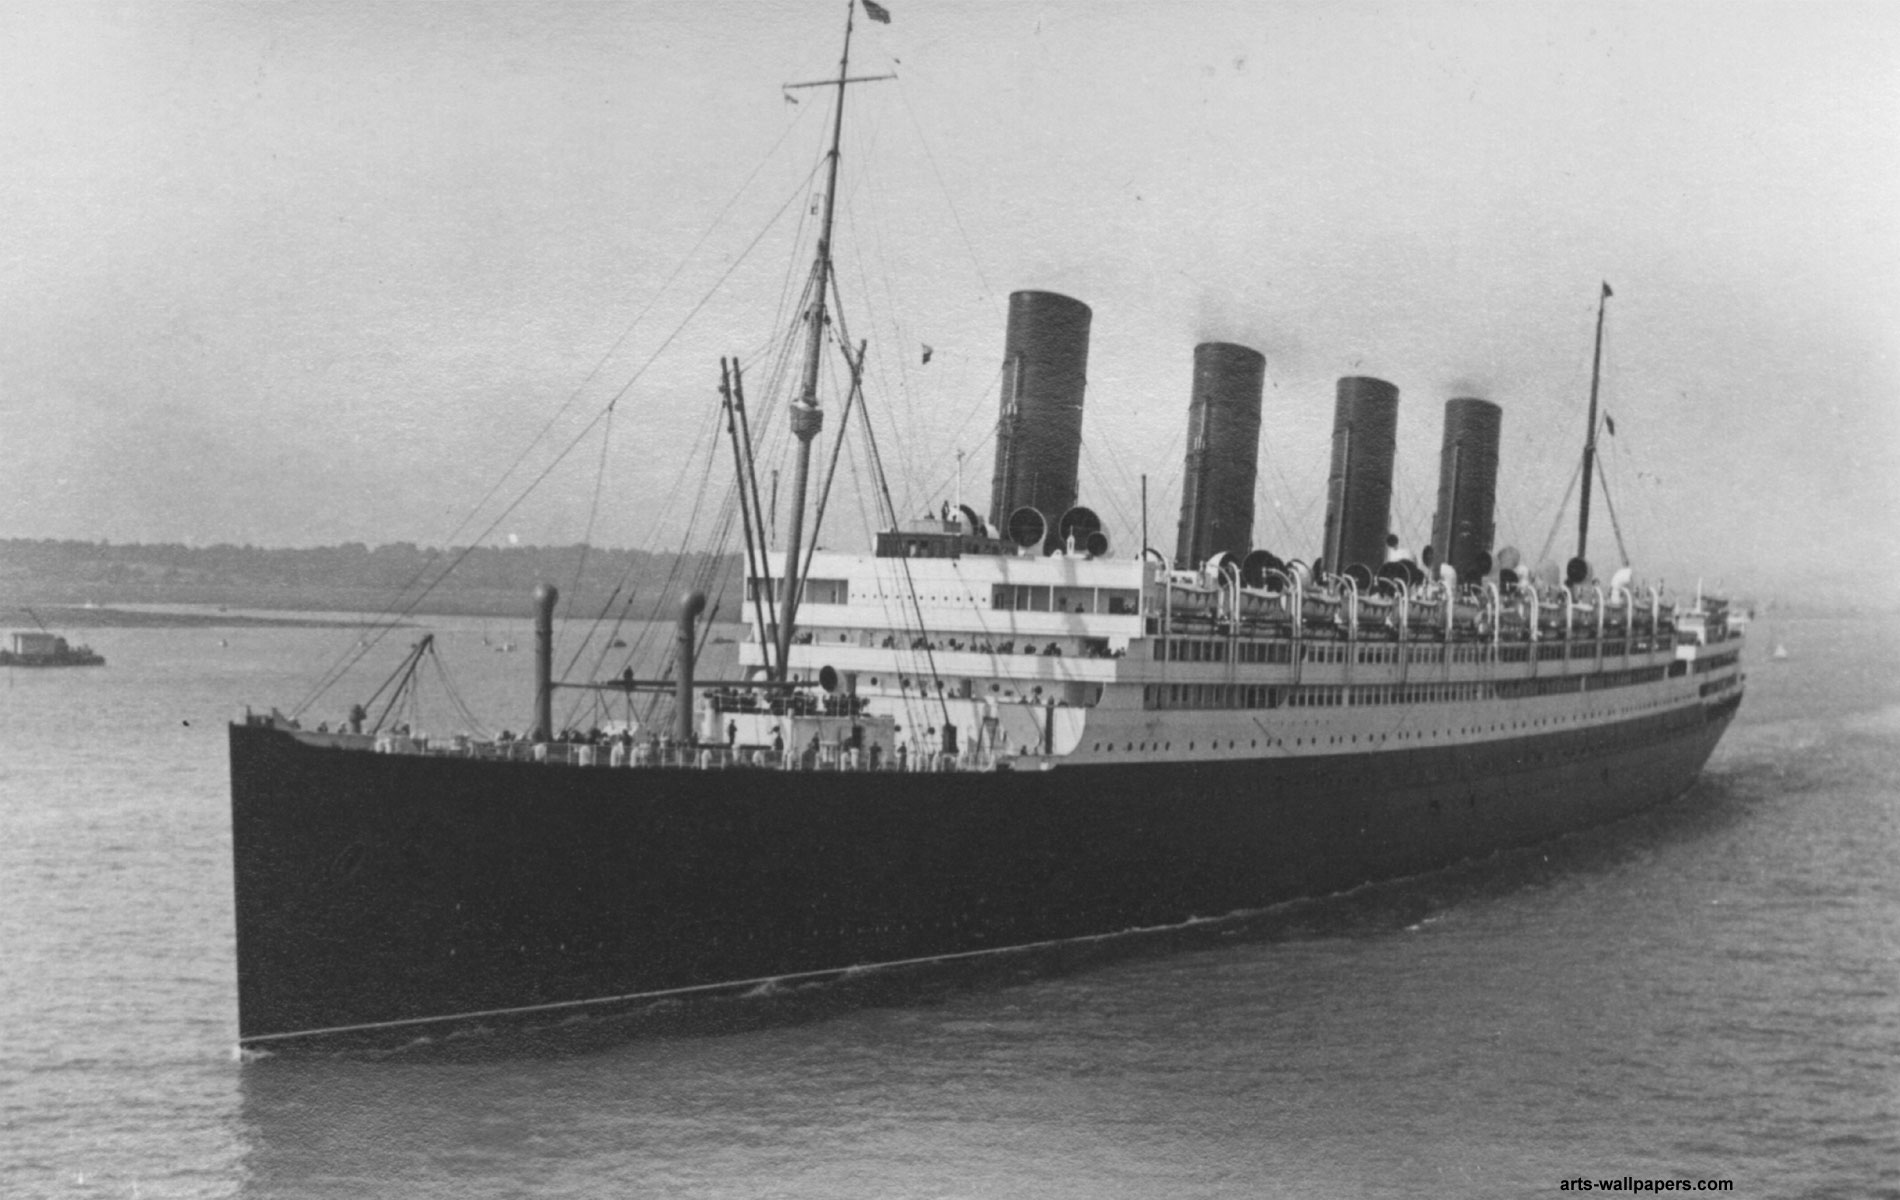 Titanic Wallpaper